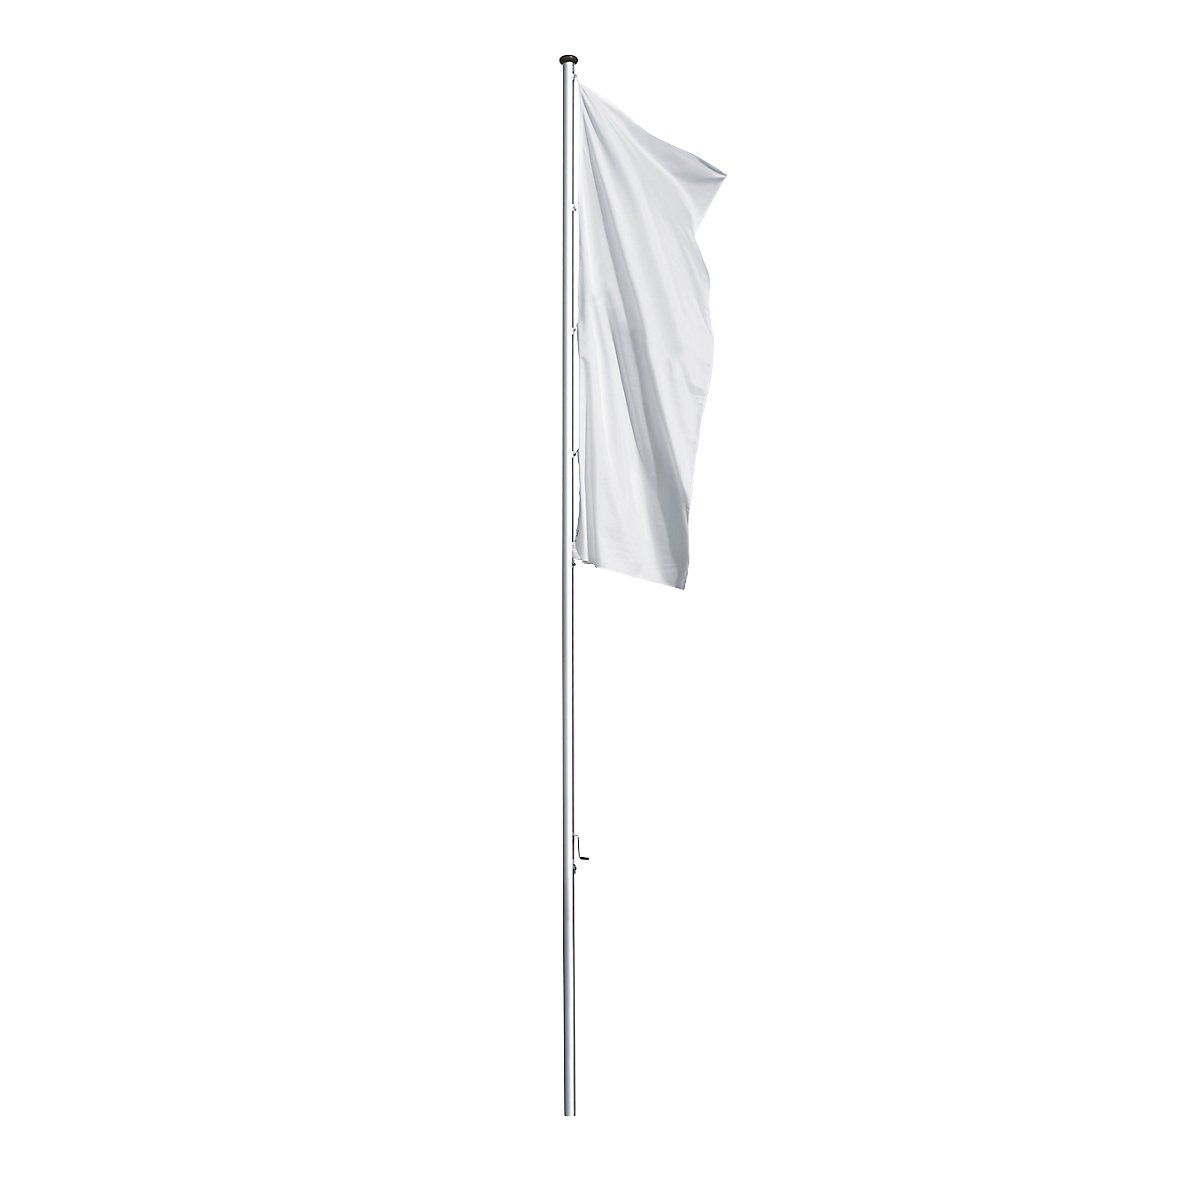 Mannus – PRESTIGE aluminium flag pole, without extension arm, height above ground 6 m, Ø 75 mm